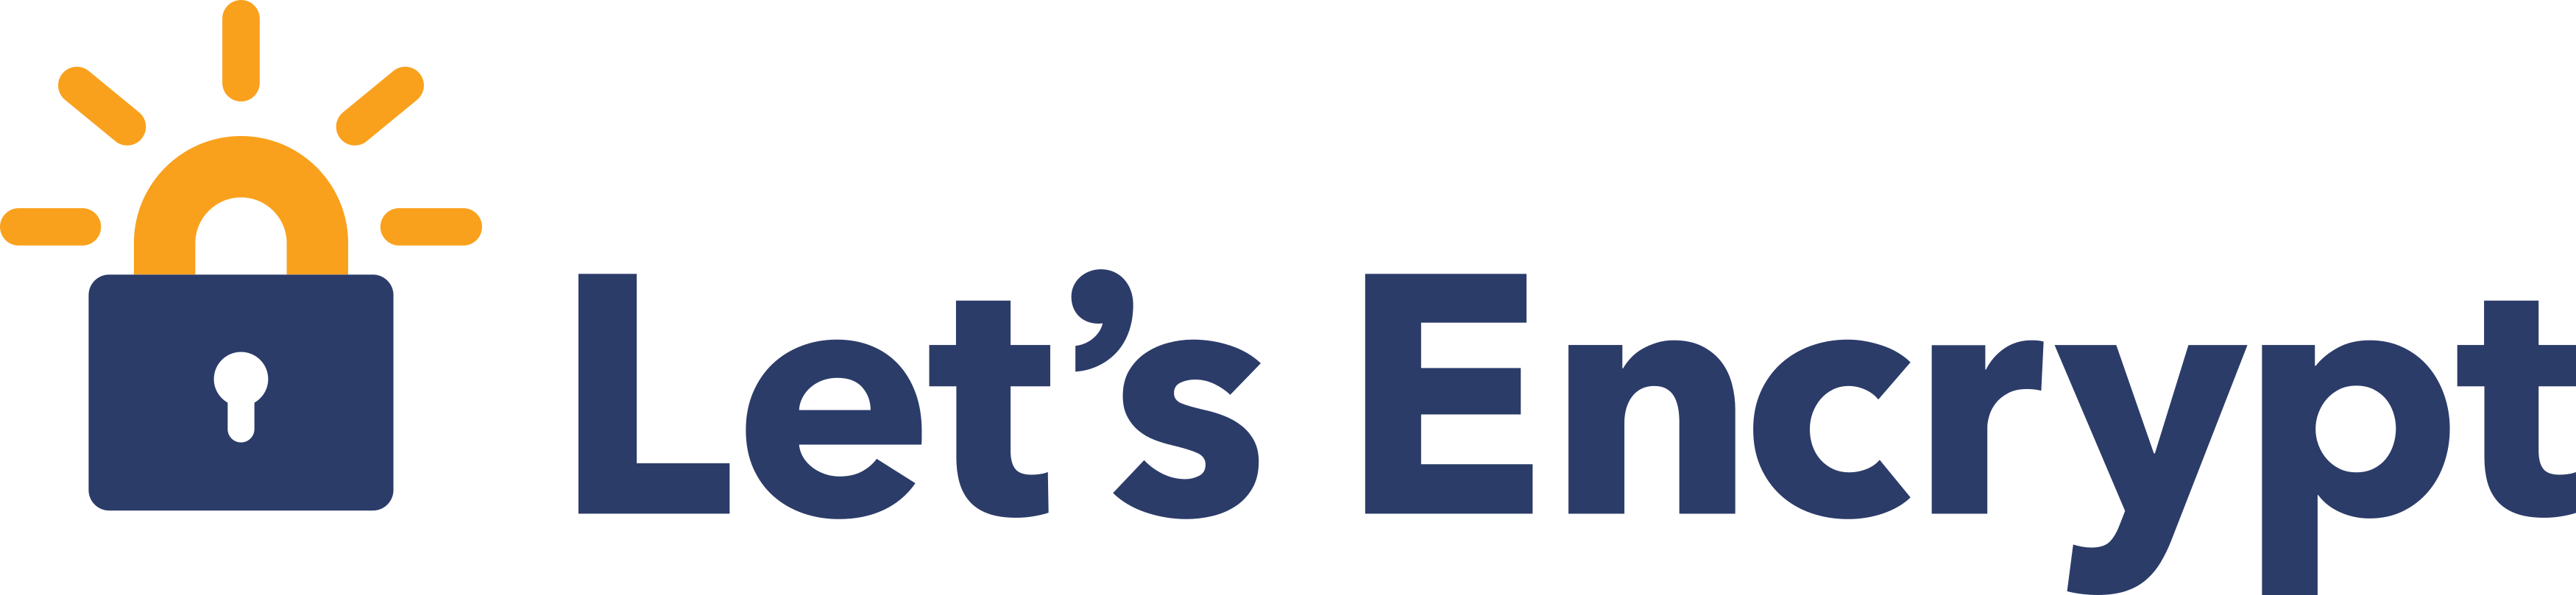 lets encrypt logo - Let’s Encrypt Logo